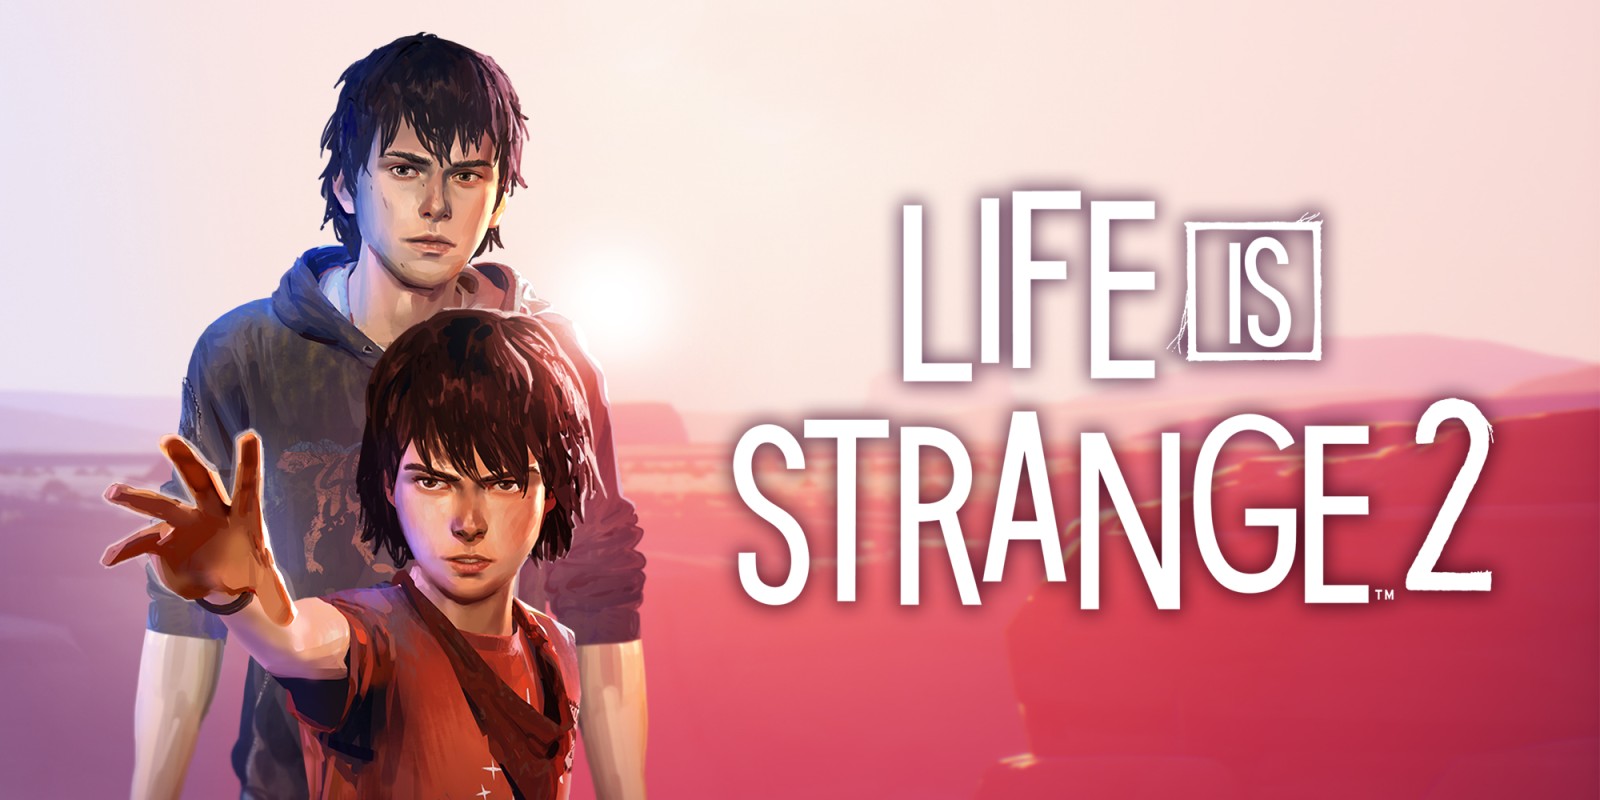 Play Life is Strange 2 on Nintendo Switch now!